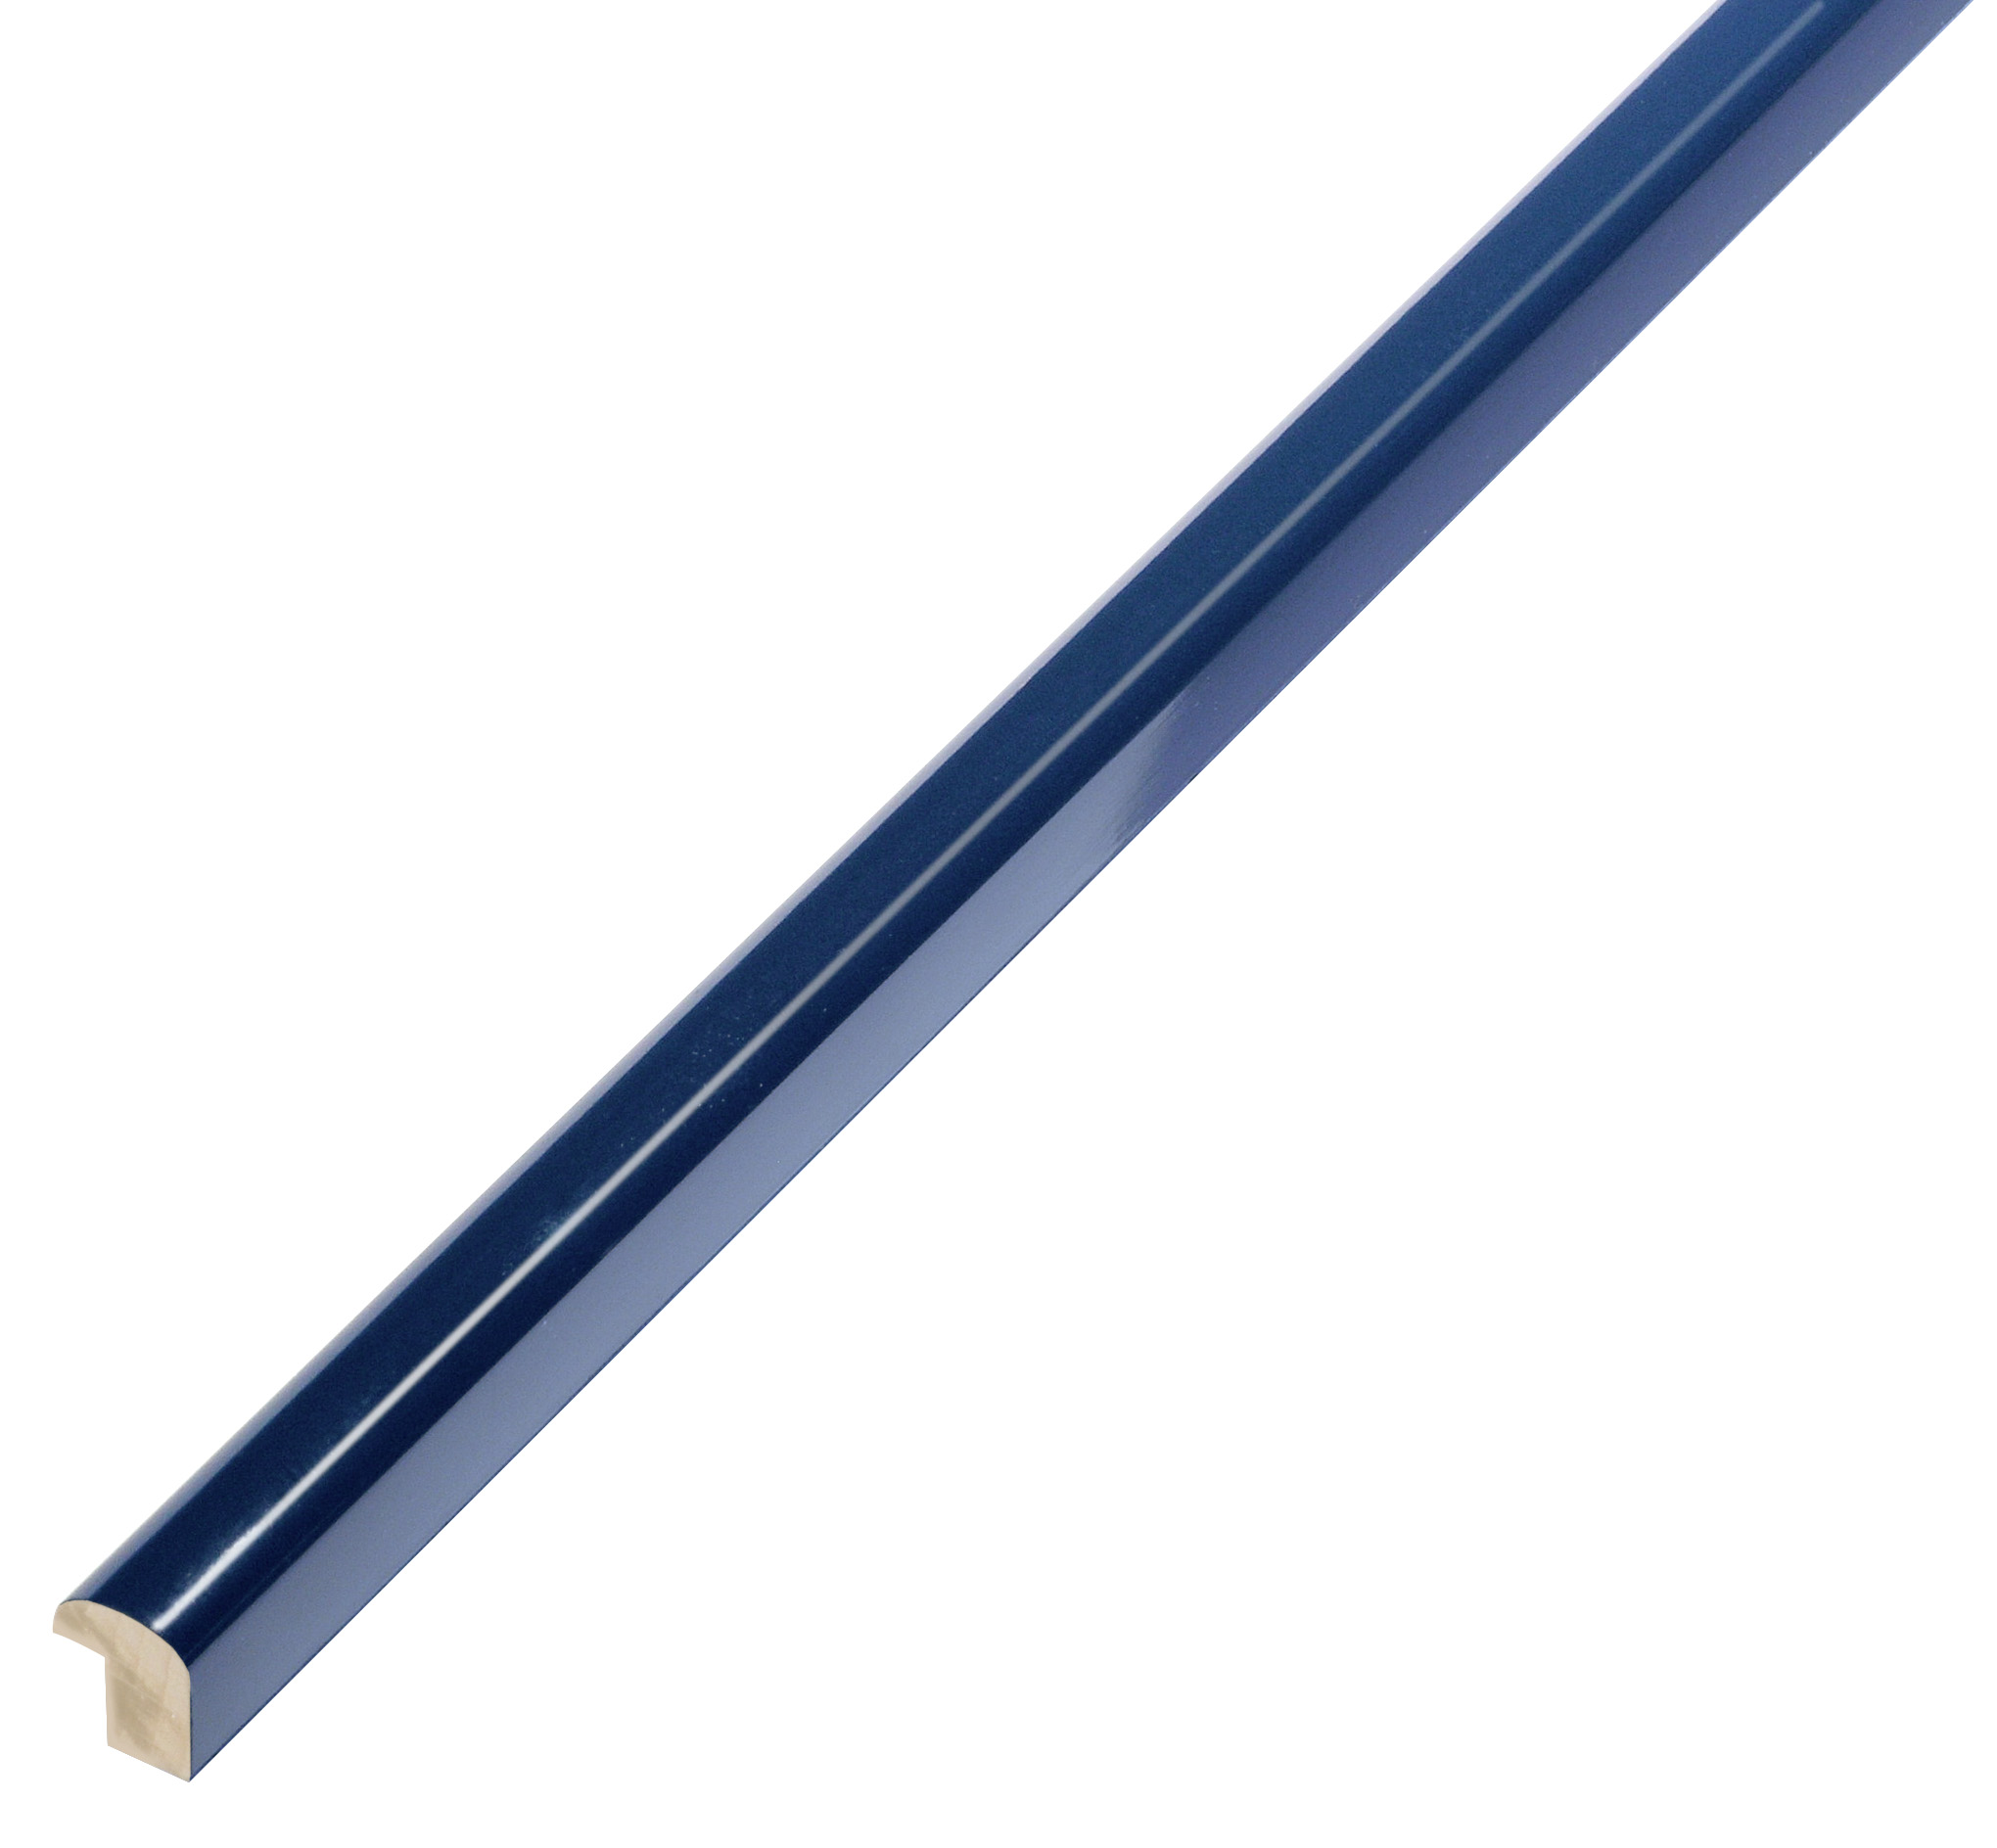 Baguette ramin, larg.11mm, haut.13mm - blue brillant - 215BLU